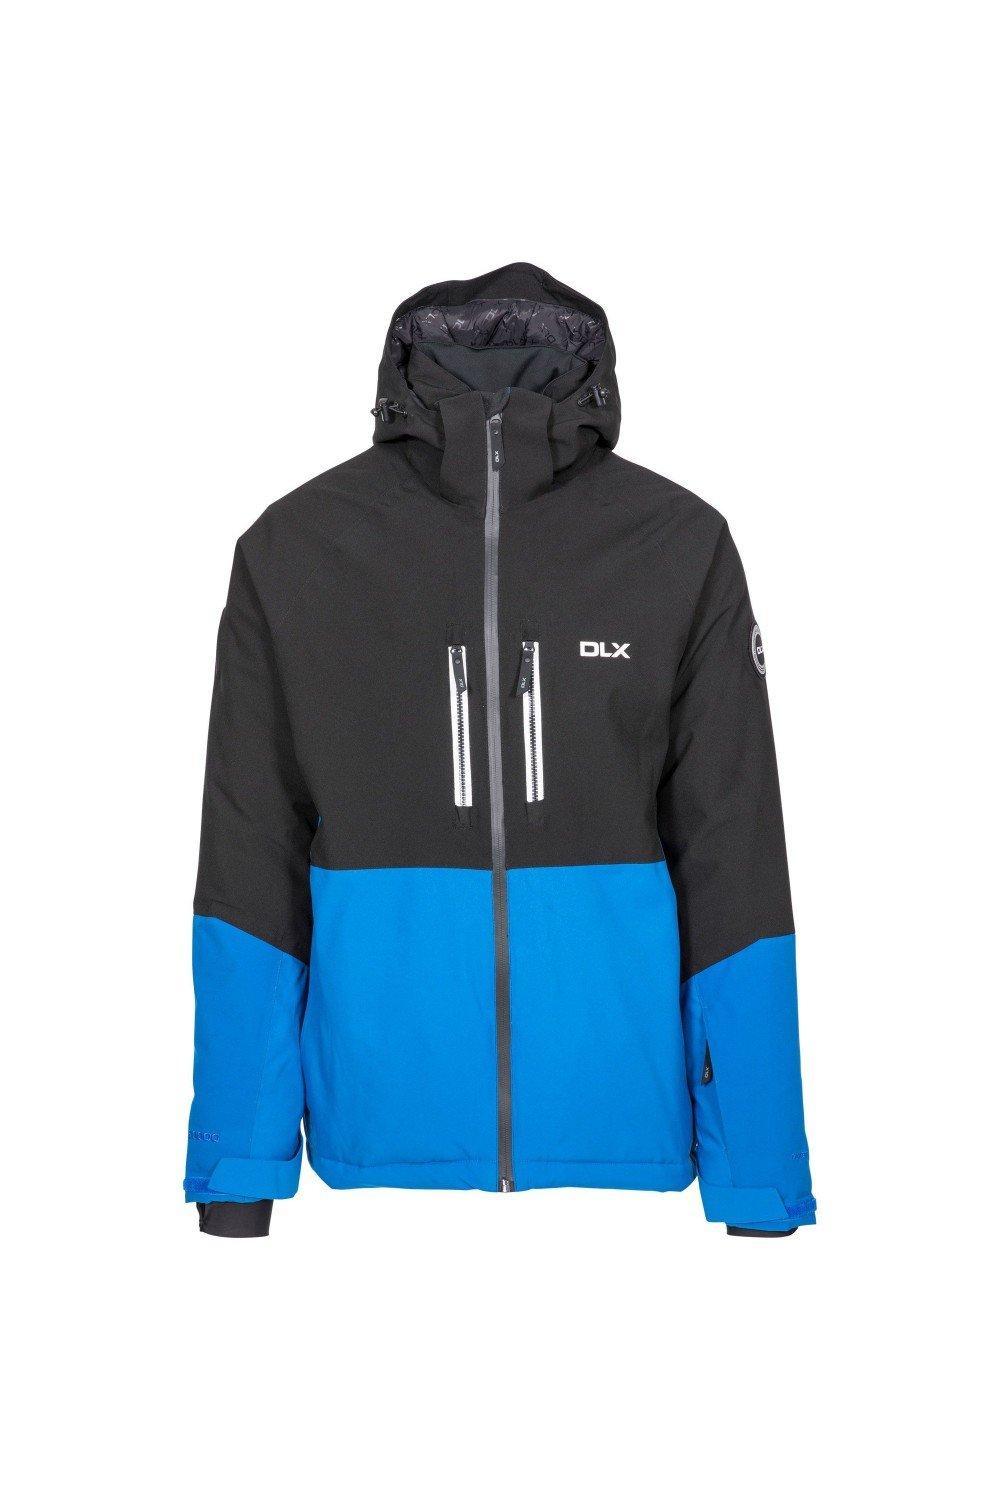 Trespass Men's Nelson DLX Ski Jacket|Size: L|blue